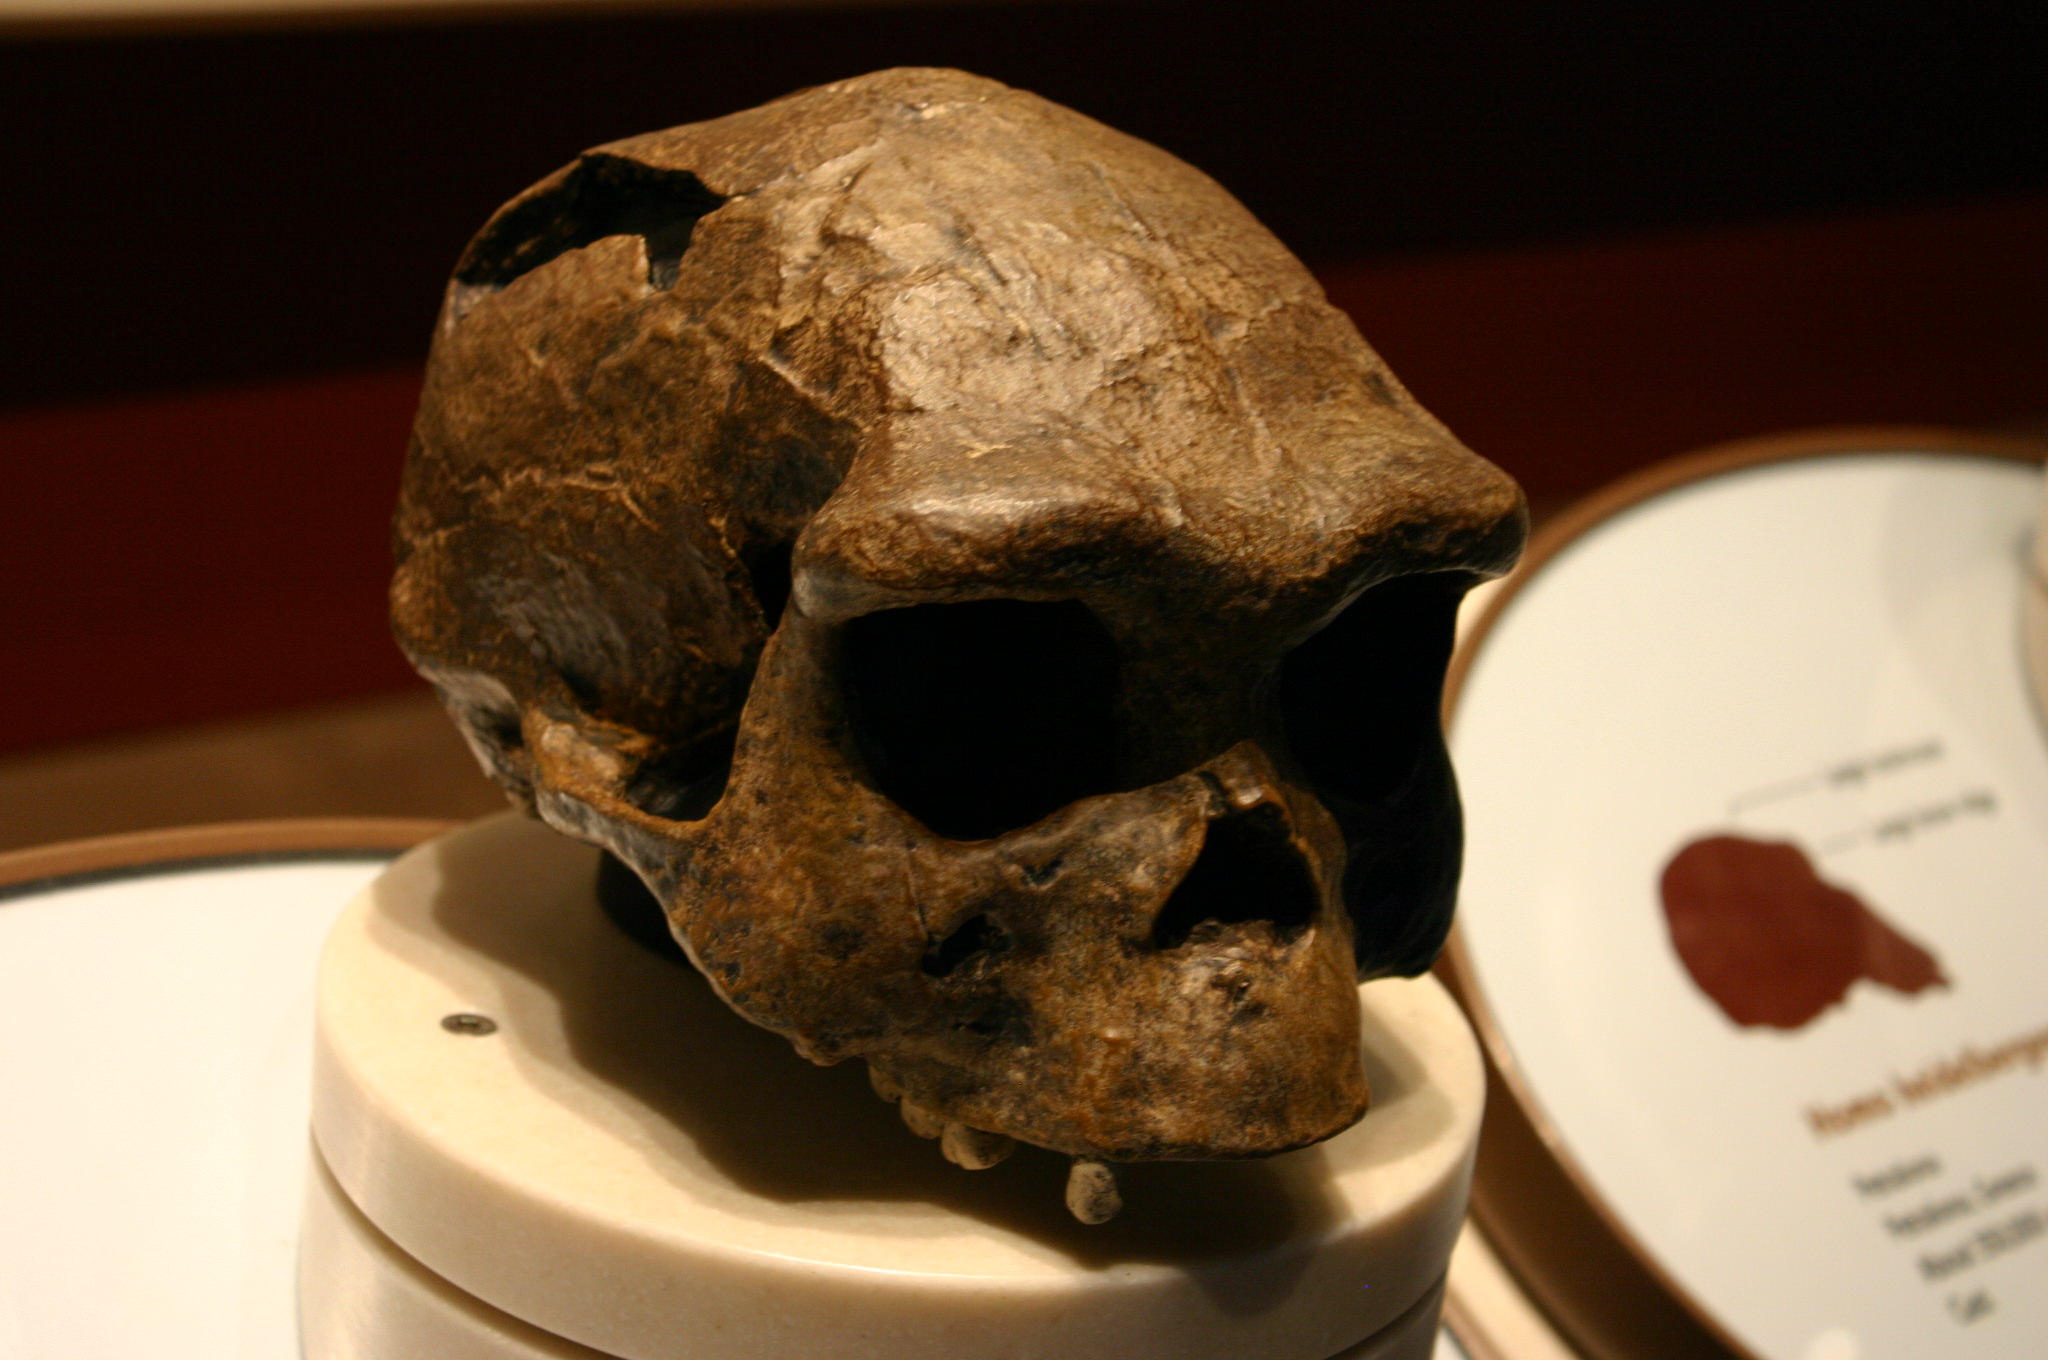 Sima de los Huesos ගුහාවේ ඇති ඇටසැකිල්ල Homo heidelbergensis ලෙස හැඳින්වෙන මුල් මානව විශේෂයට පවරා ඇත. කෙසේ වෙතත්, පර්යේෂකයන් පවසන්නේ අස්ථි ව්‍යුහය නියැන්ඩර්තාල් මානවයාගේ හා සමාන බවයි - සමහරු පවසන්නේ සිමා ඩි ලොස් හියුසෝස් මිනිසුන් හෝමෝ හයිඩෙල්බර්ජන්සිස්ගේ නියෝජිතයින්ට වඩා ඇත්ත වශයෙන්ම නියැන්ඩර්තාල්වරුන් බවයි.